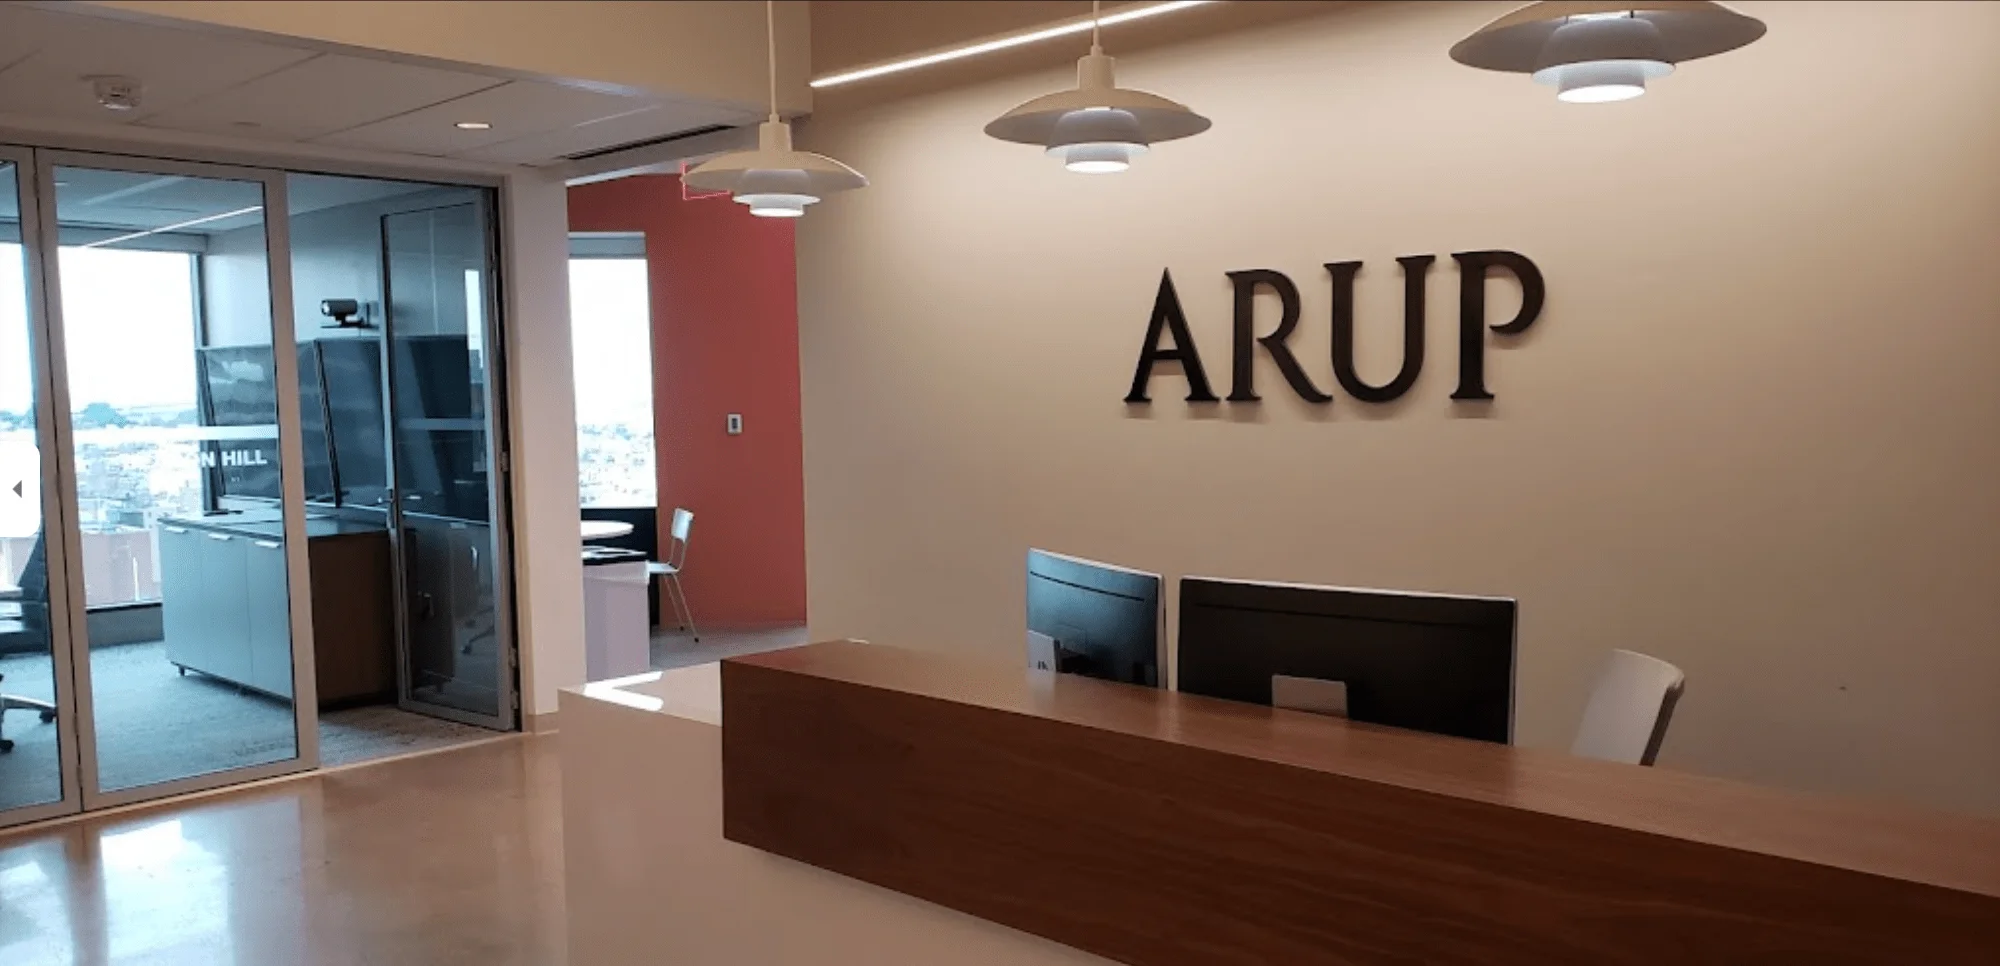 ARUP Headquarters - Source ESG News